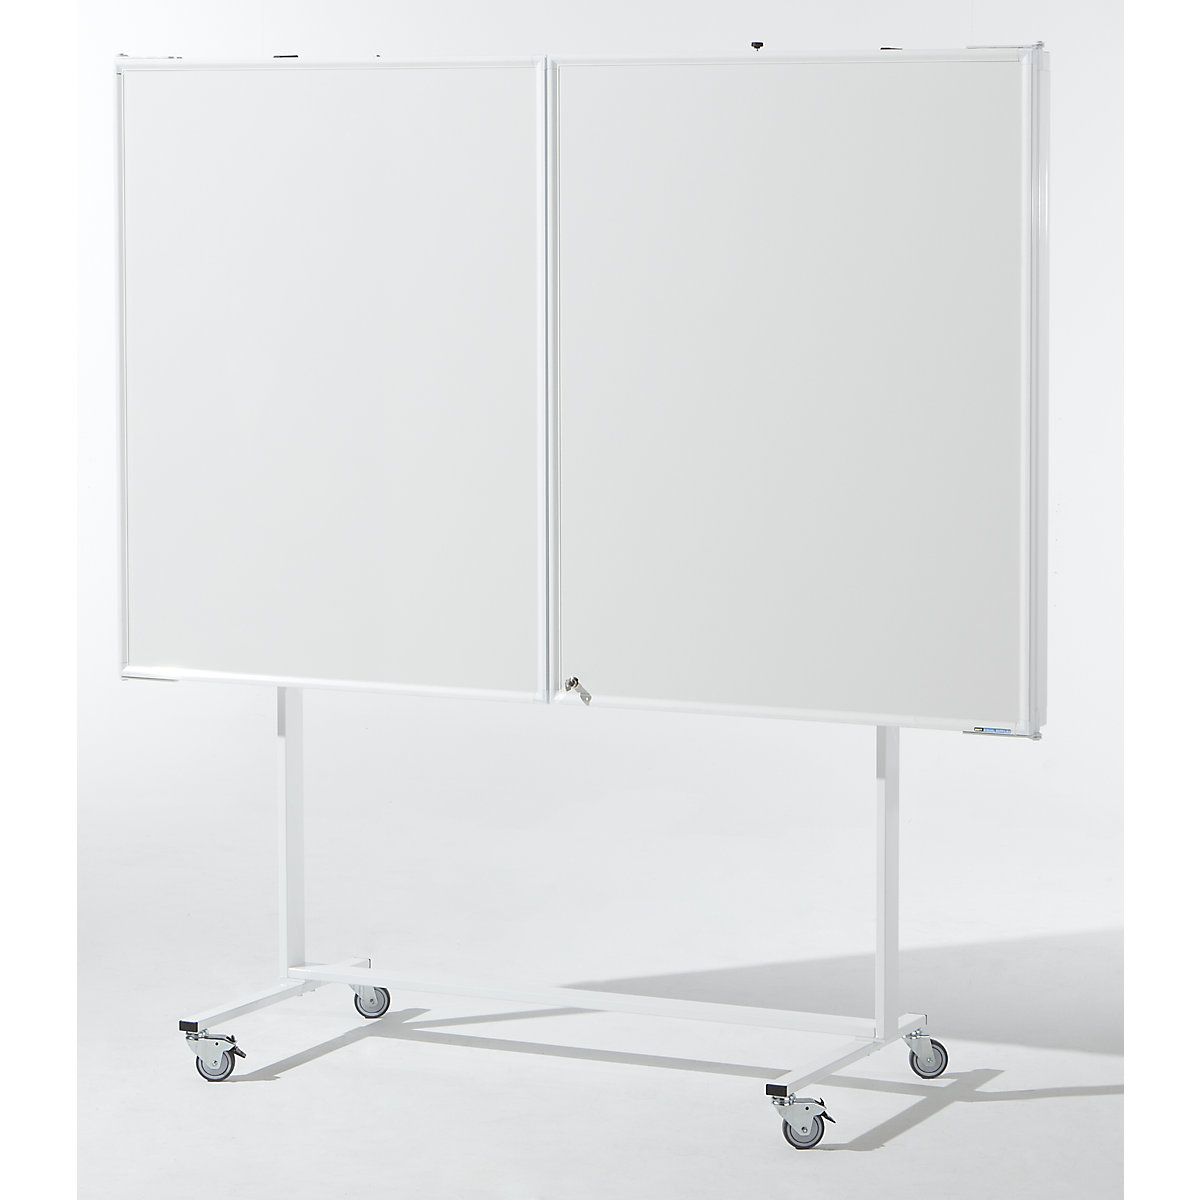 Panou whiteboard rabatabil, set complet (Imagine produs 3)